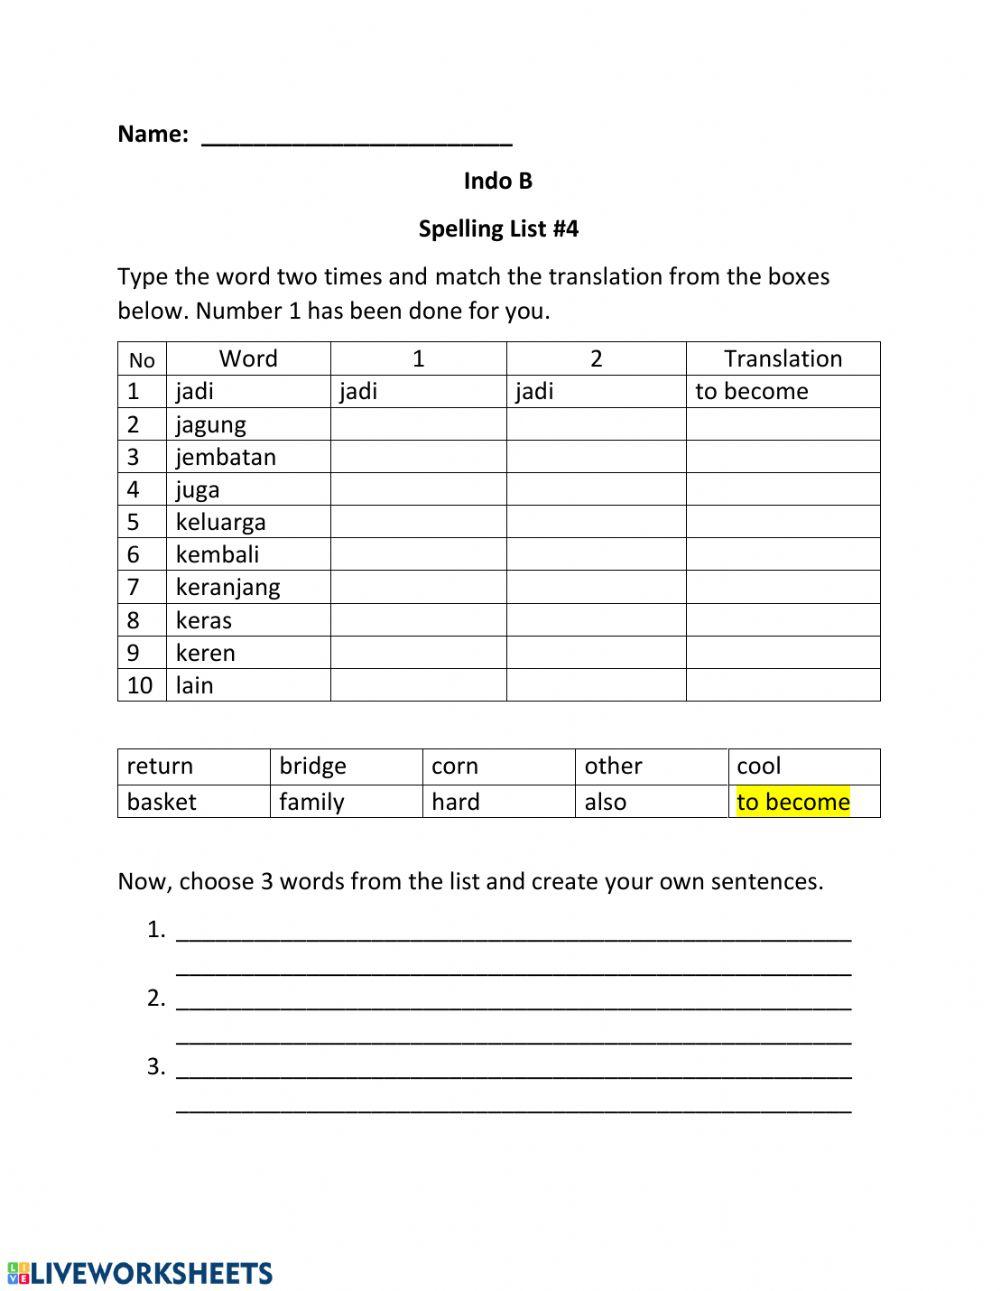 Indo B Spelling List -4